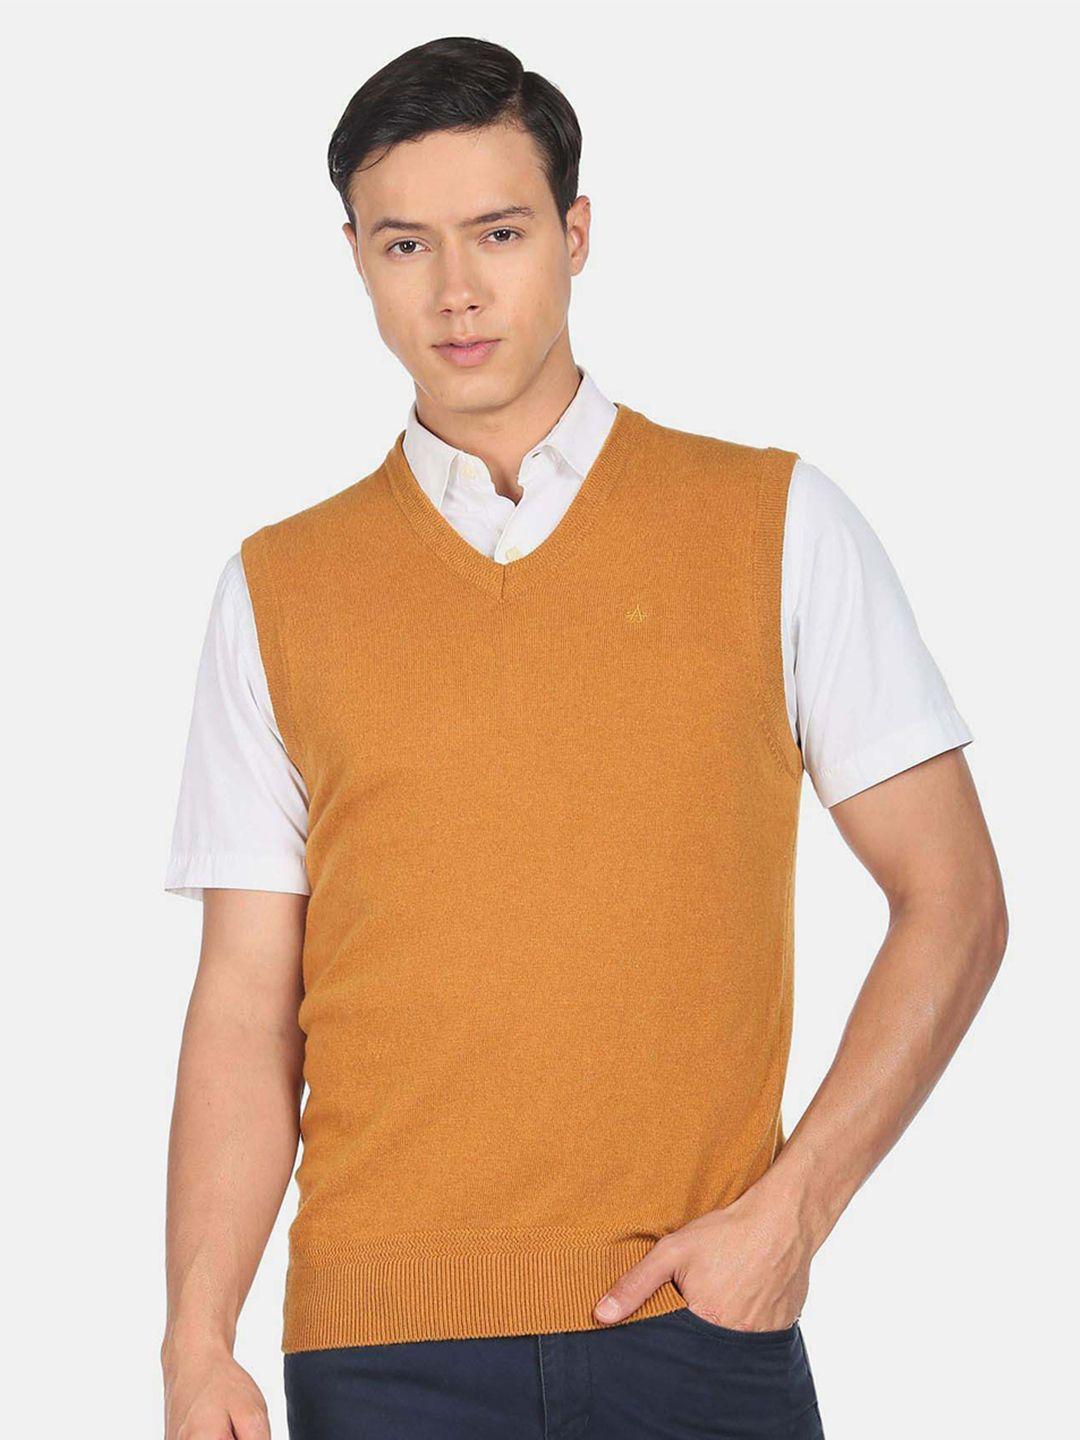 arrow sport v-neck sleeveless sweater vest